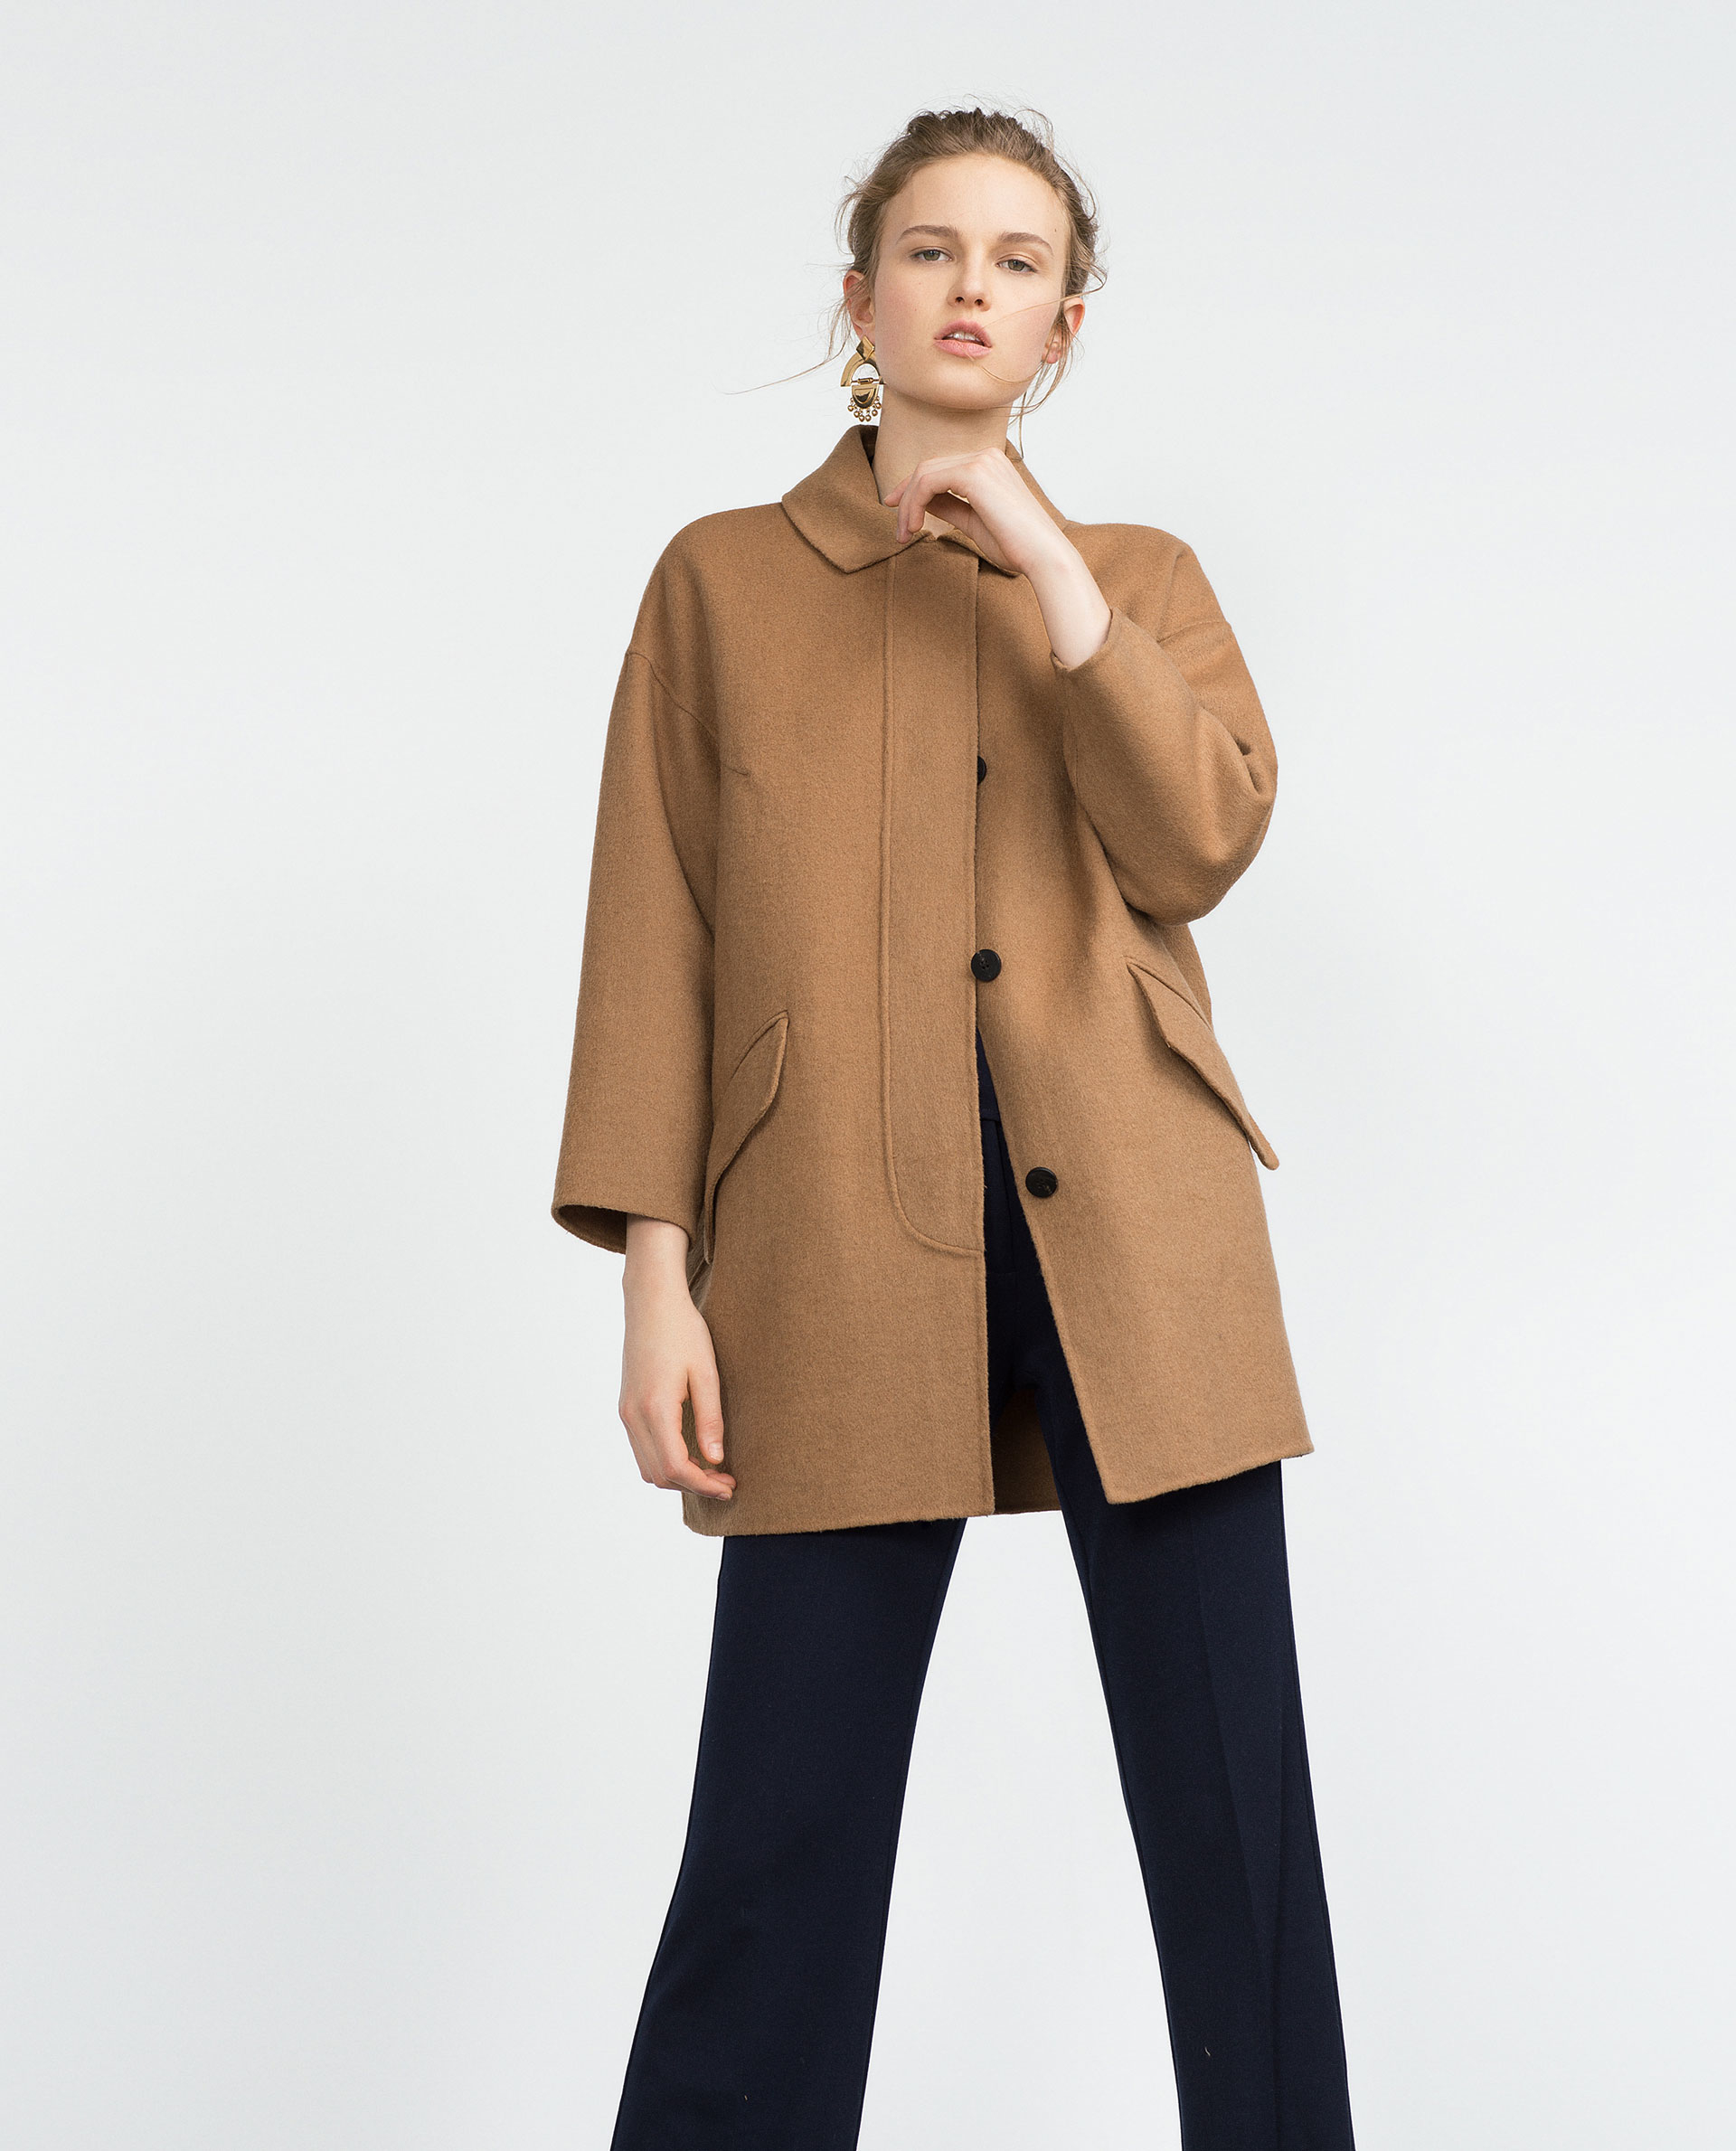 Zara Coat With Pockets in Beige (Camel) | Lyst